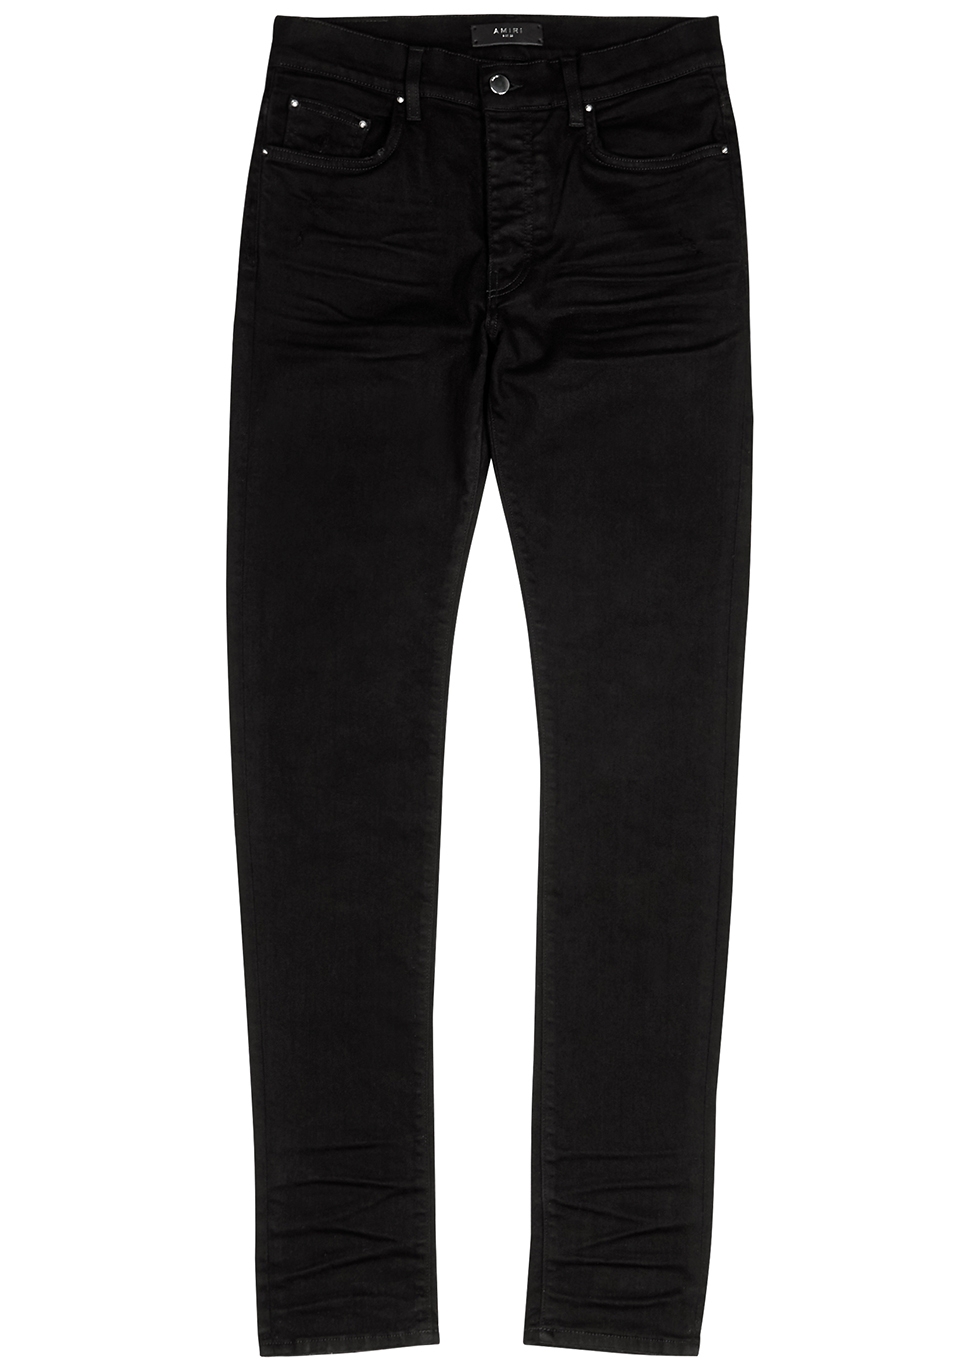 KIDS Skater black stretch-denim jeans Harvey Nichols Clothing Jeans Stretch Jeans 